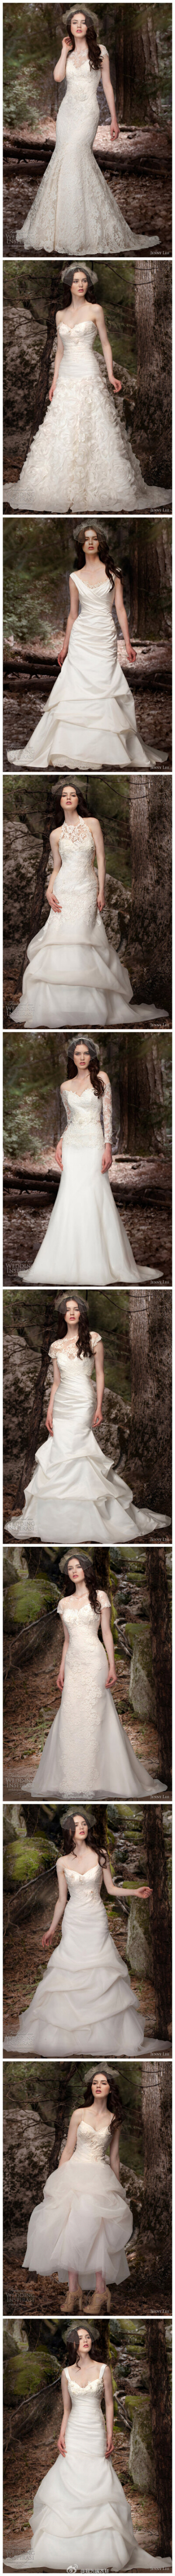 Jenny Lee（李宏玮）2013婚纱系列，华丽的蕾丝，精致的花边装饰，飘逸的纱袍堆砌褶皱的裙摆，美丽娴雅。